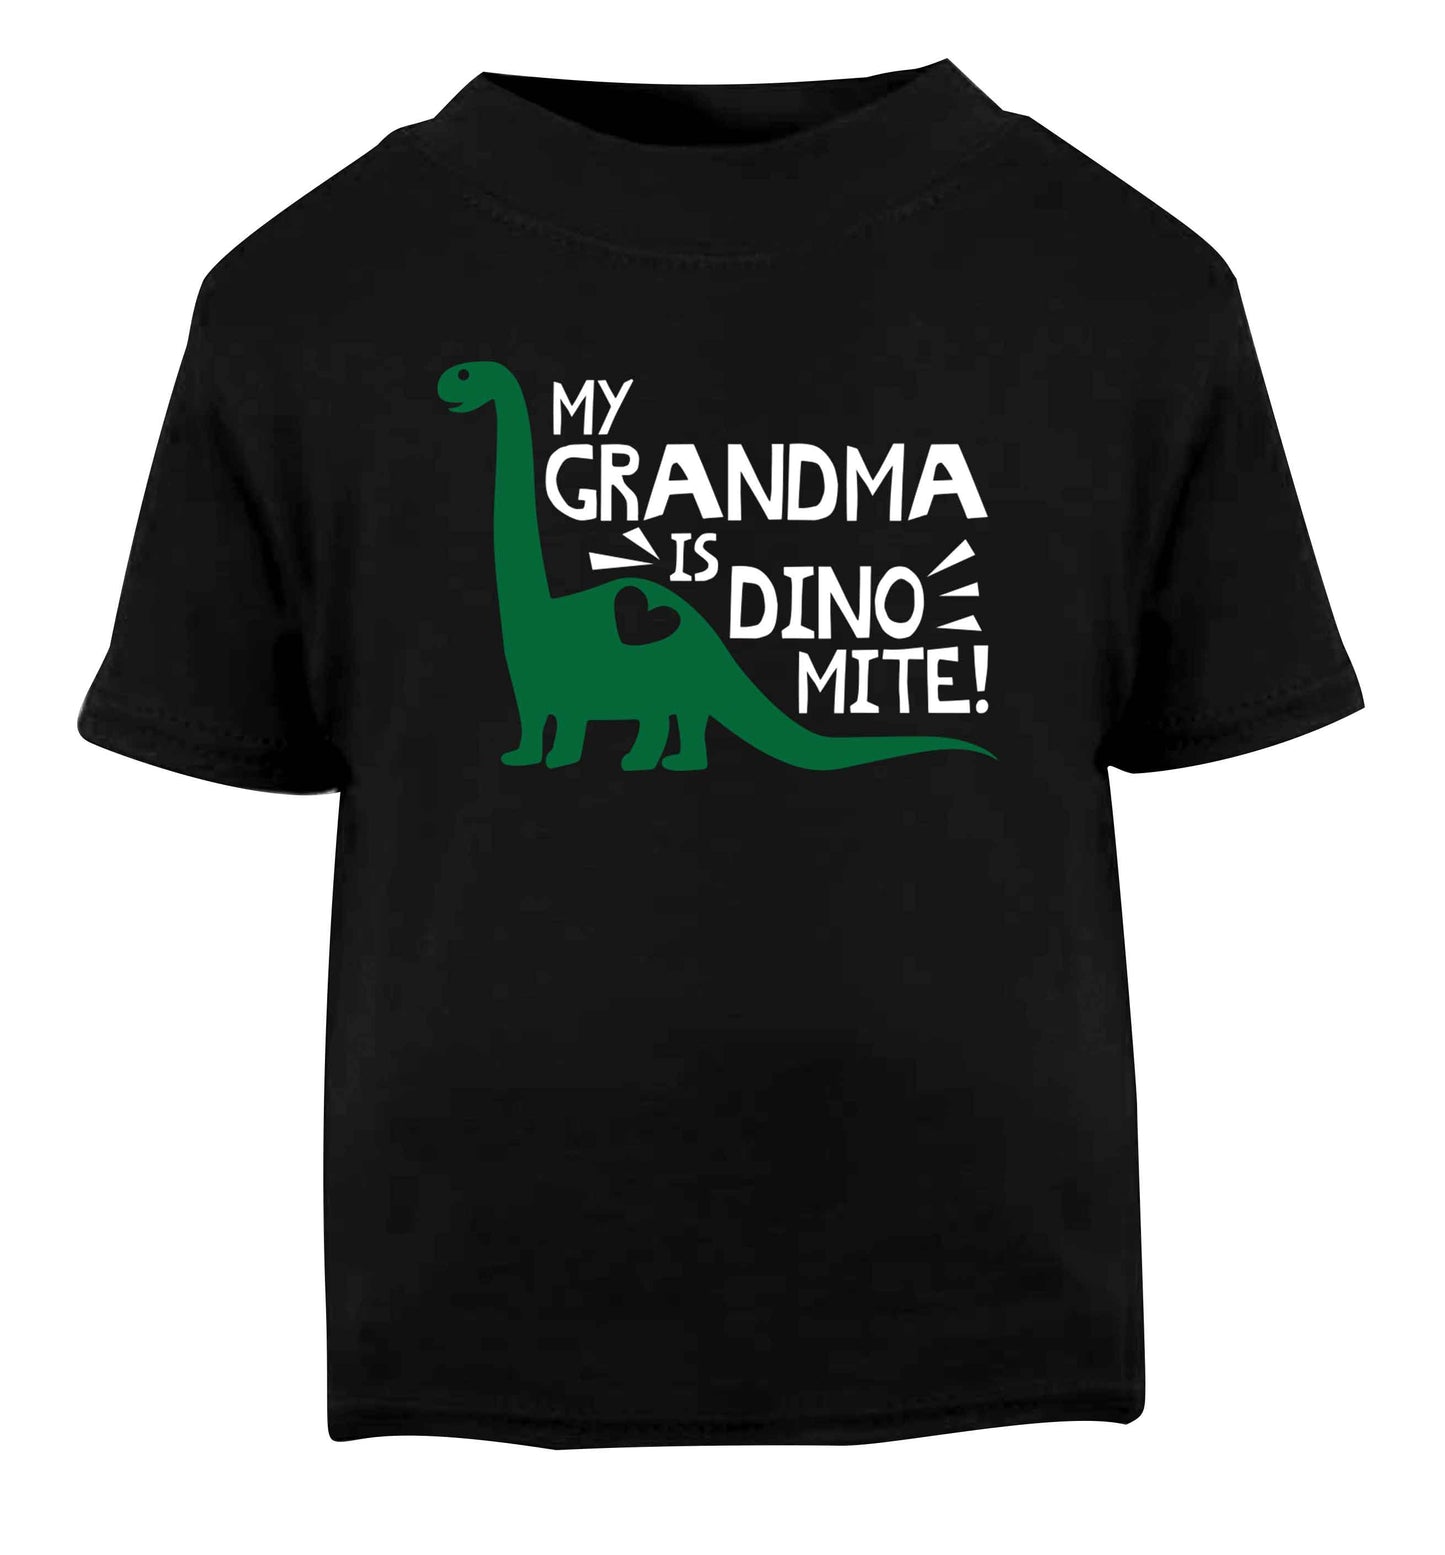 My grandma is dinomite! Black Baby Toddler Tshirt 2 years